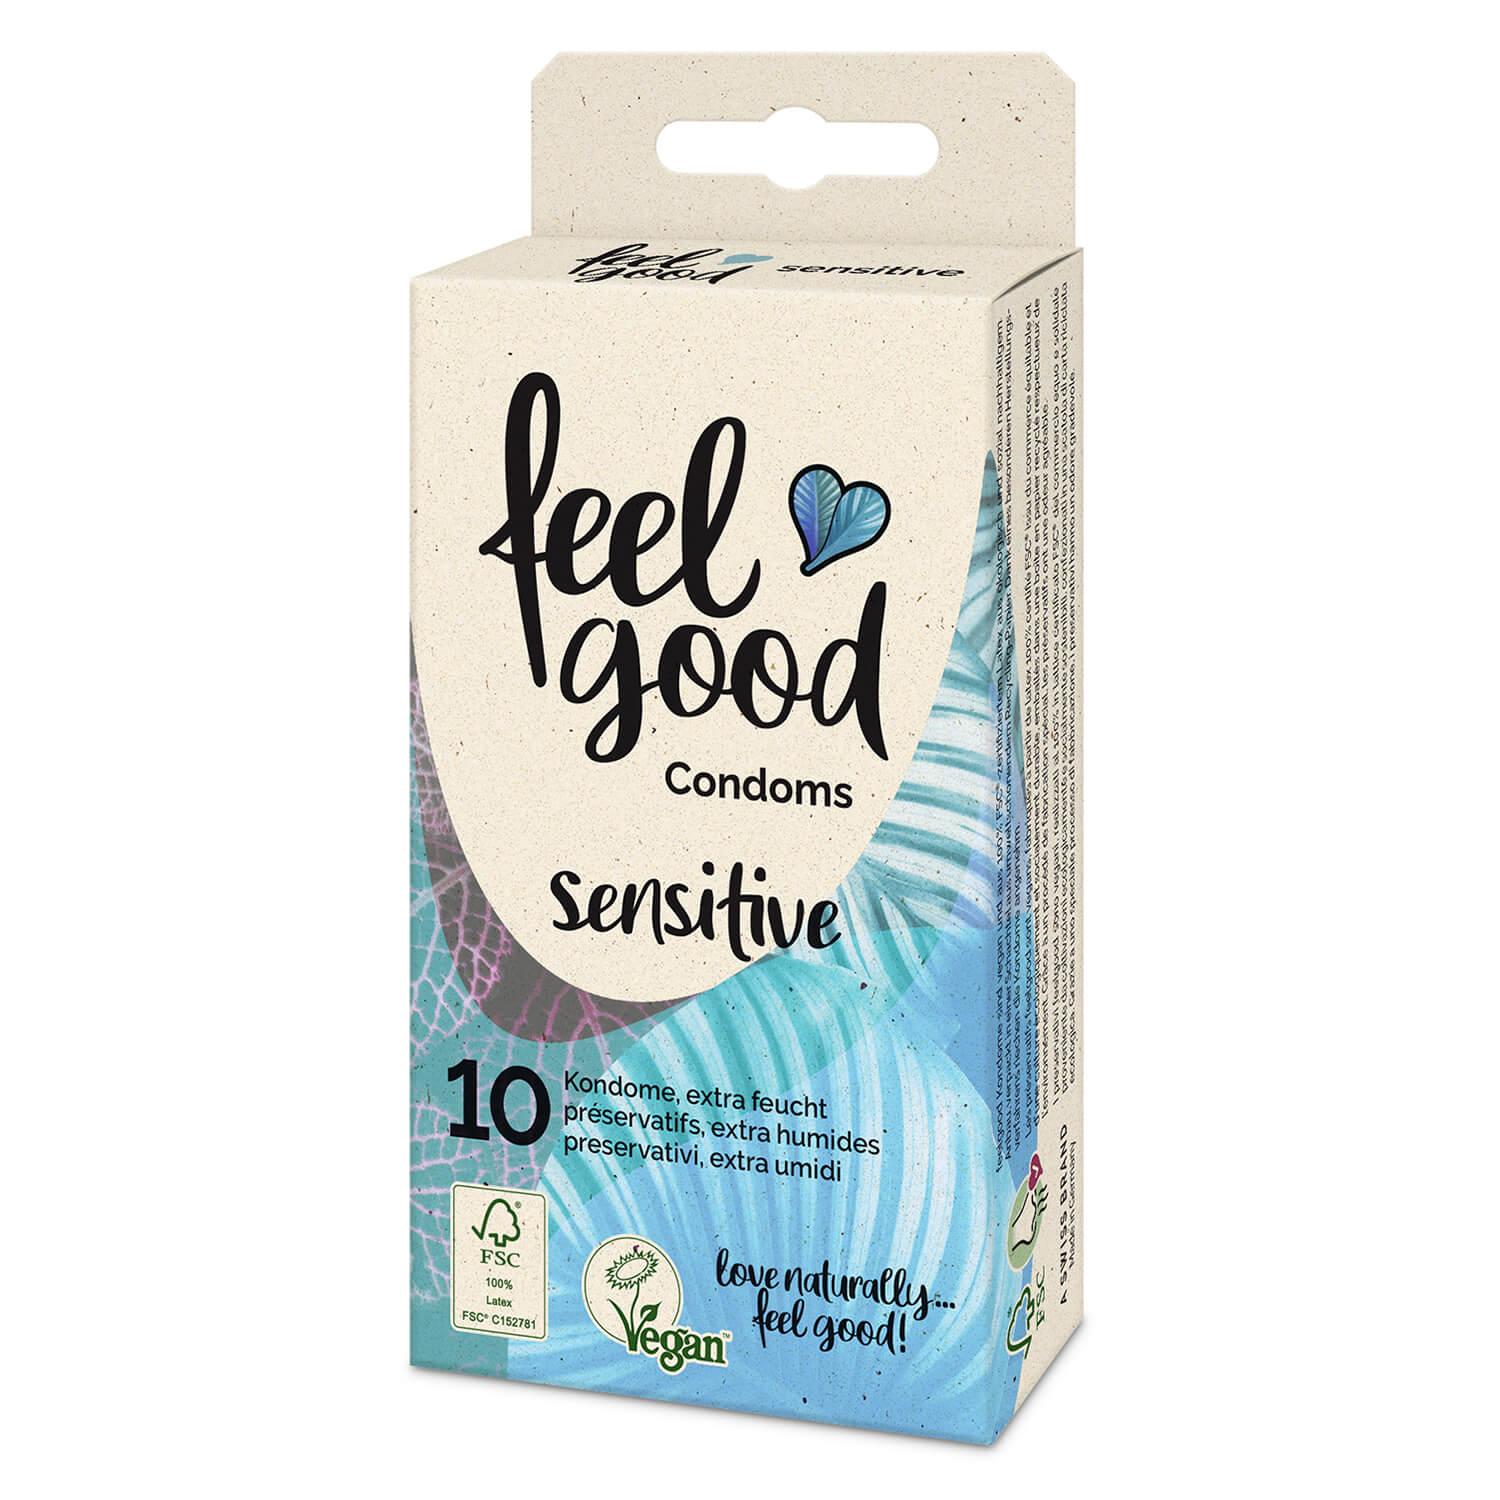 feelgood condoms - Préservatifs sensitive